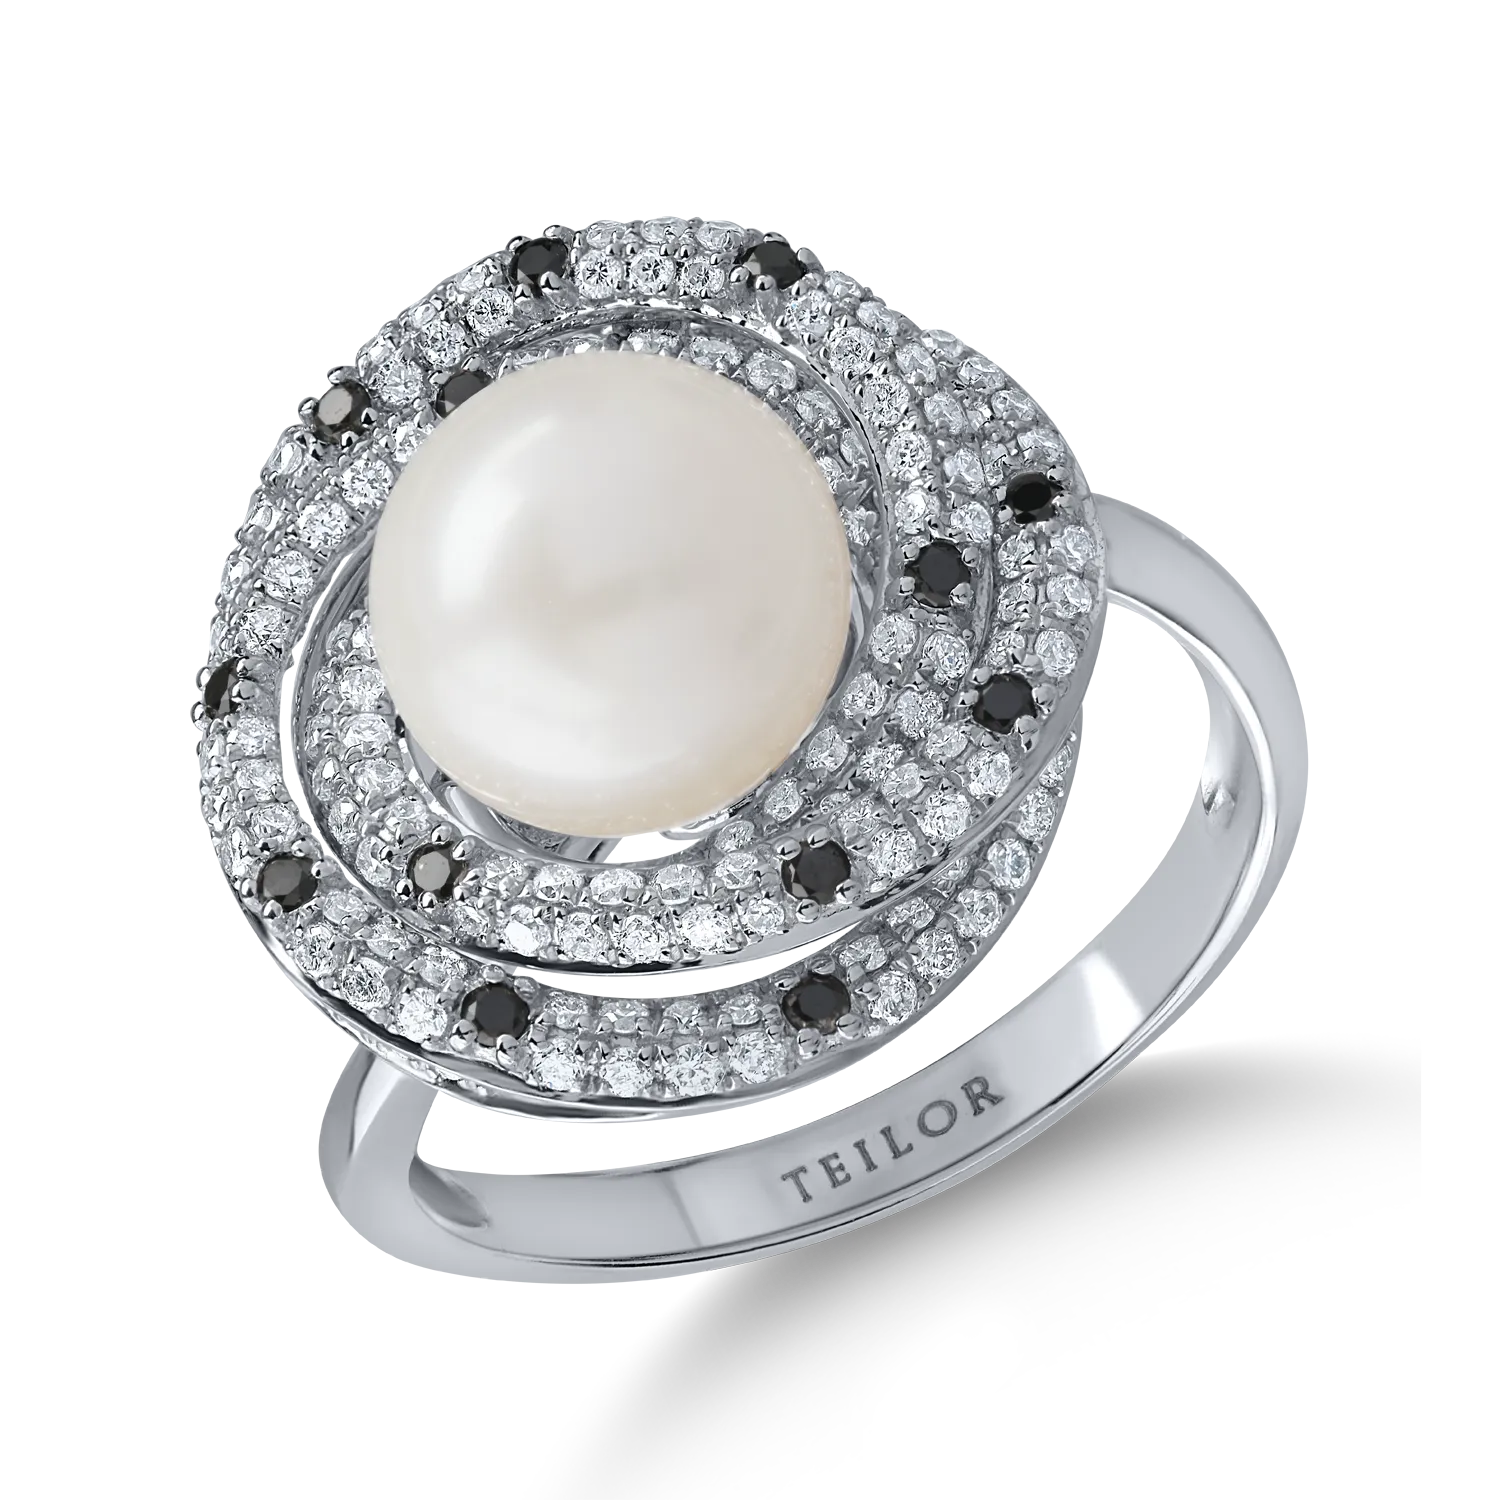 Inel din aur alb cu perla de cultura de 4.3ct si diamante de 0.7ct